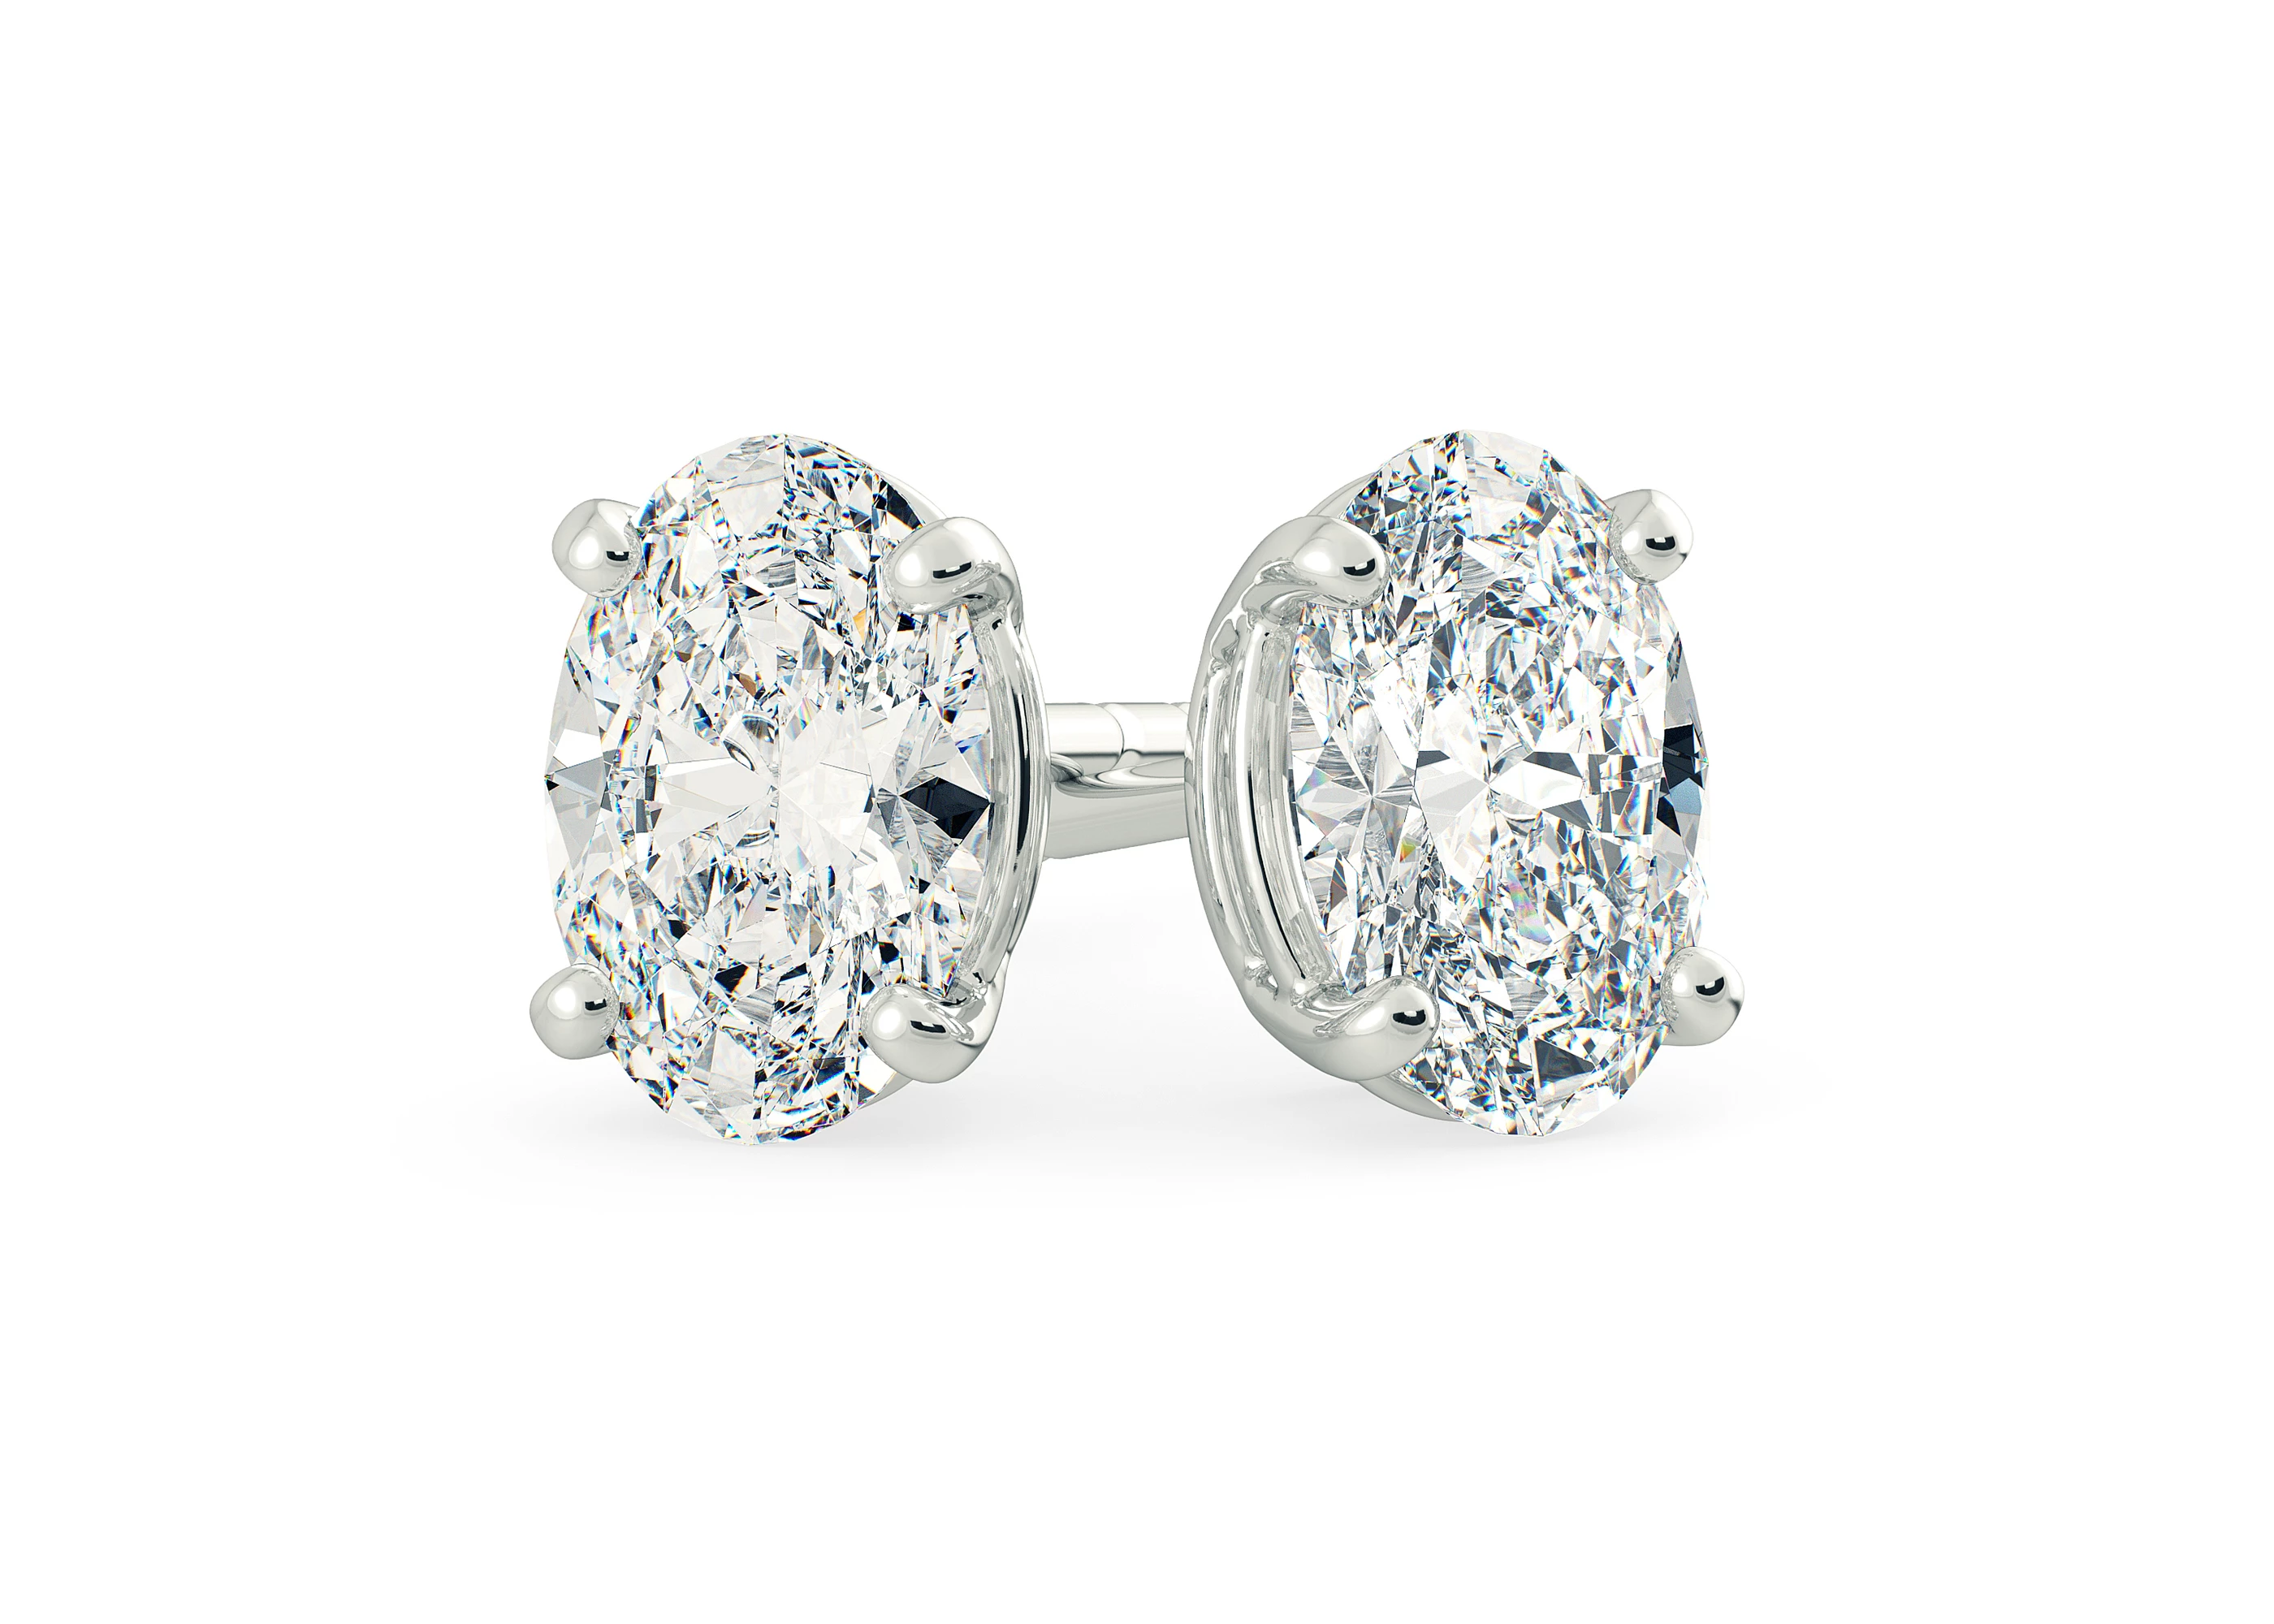 Two Carat Oval Diamond Stud Earrings in Platinum 950